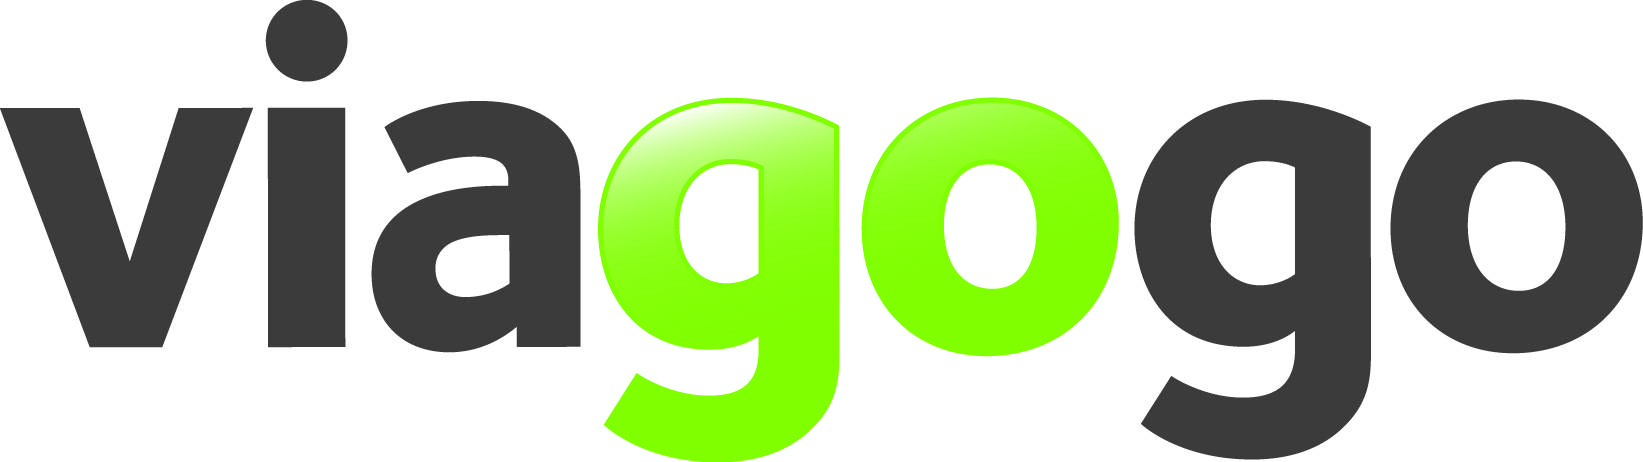 VIAGOGO Scraper logo